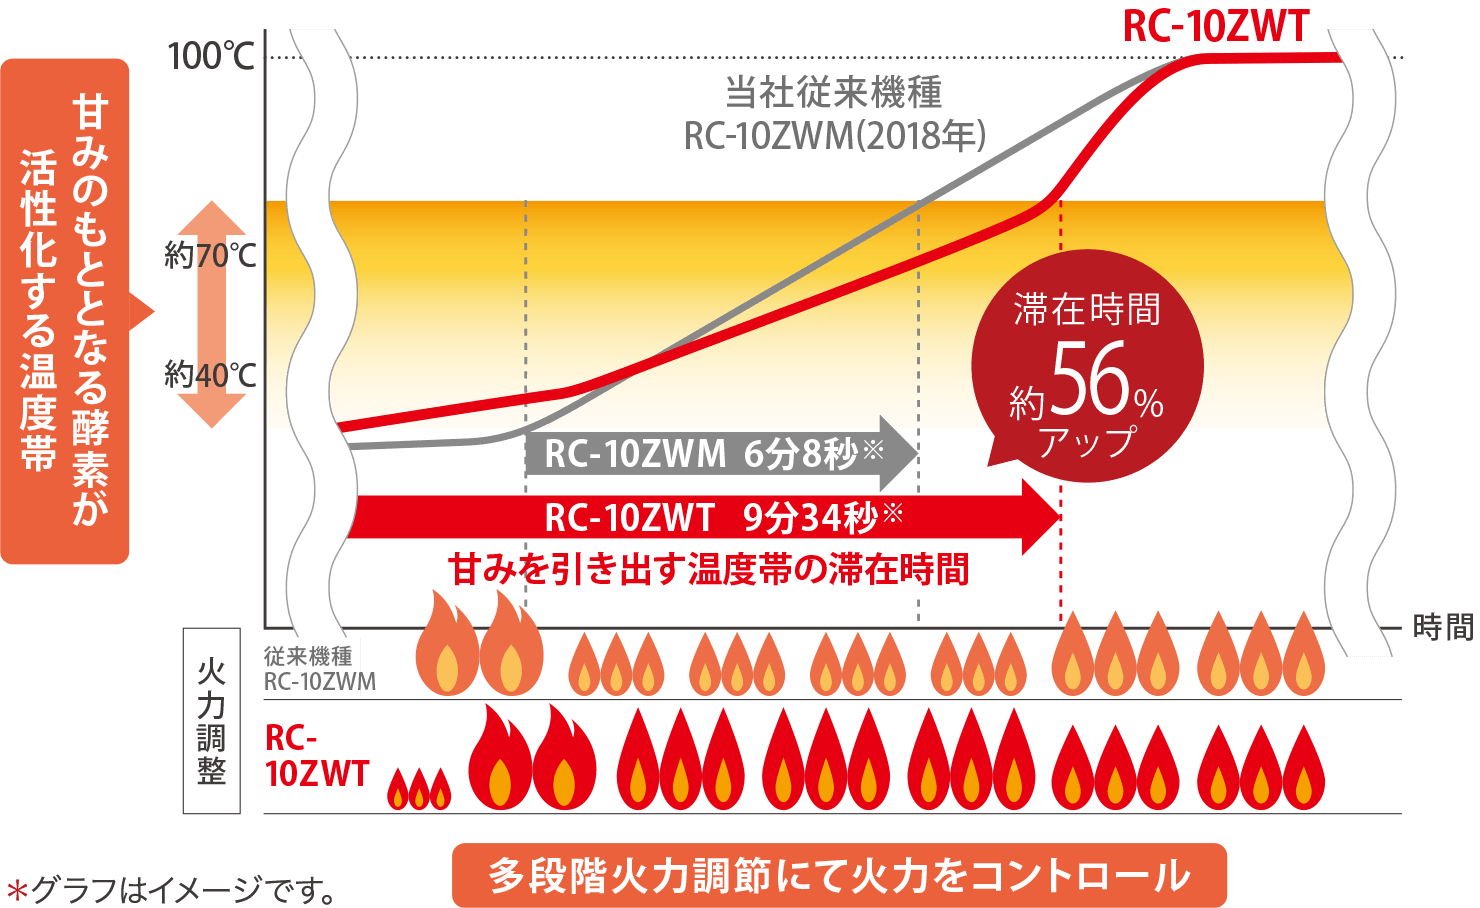 fire sec1 aside 1 - 【鬼比較】人気のおすすめ高級炊飯器2022年/2023年版まとめ